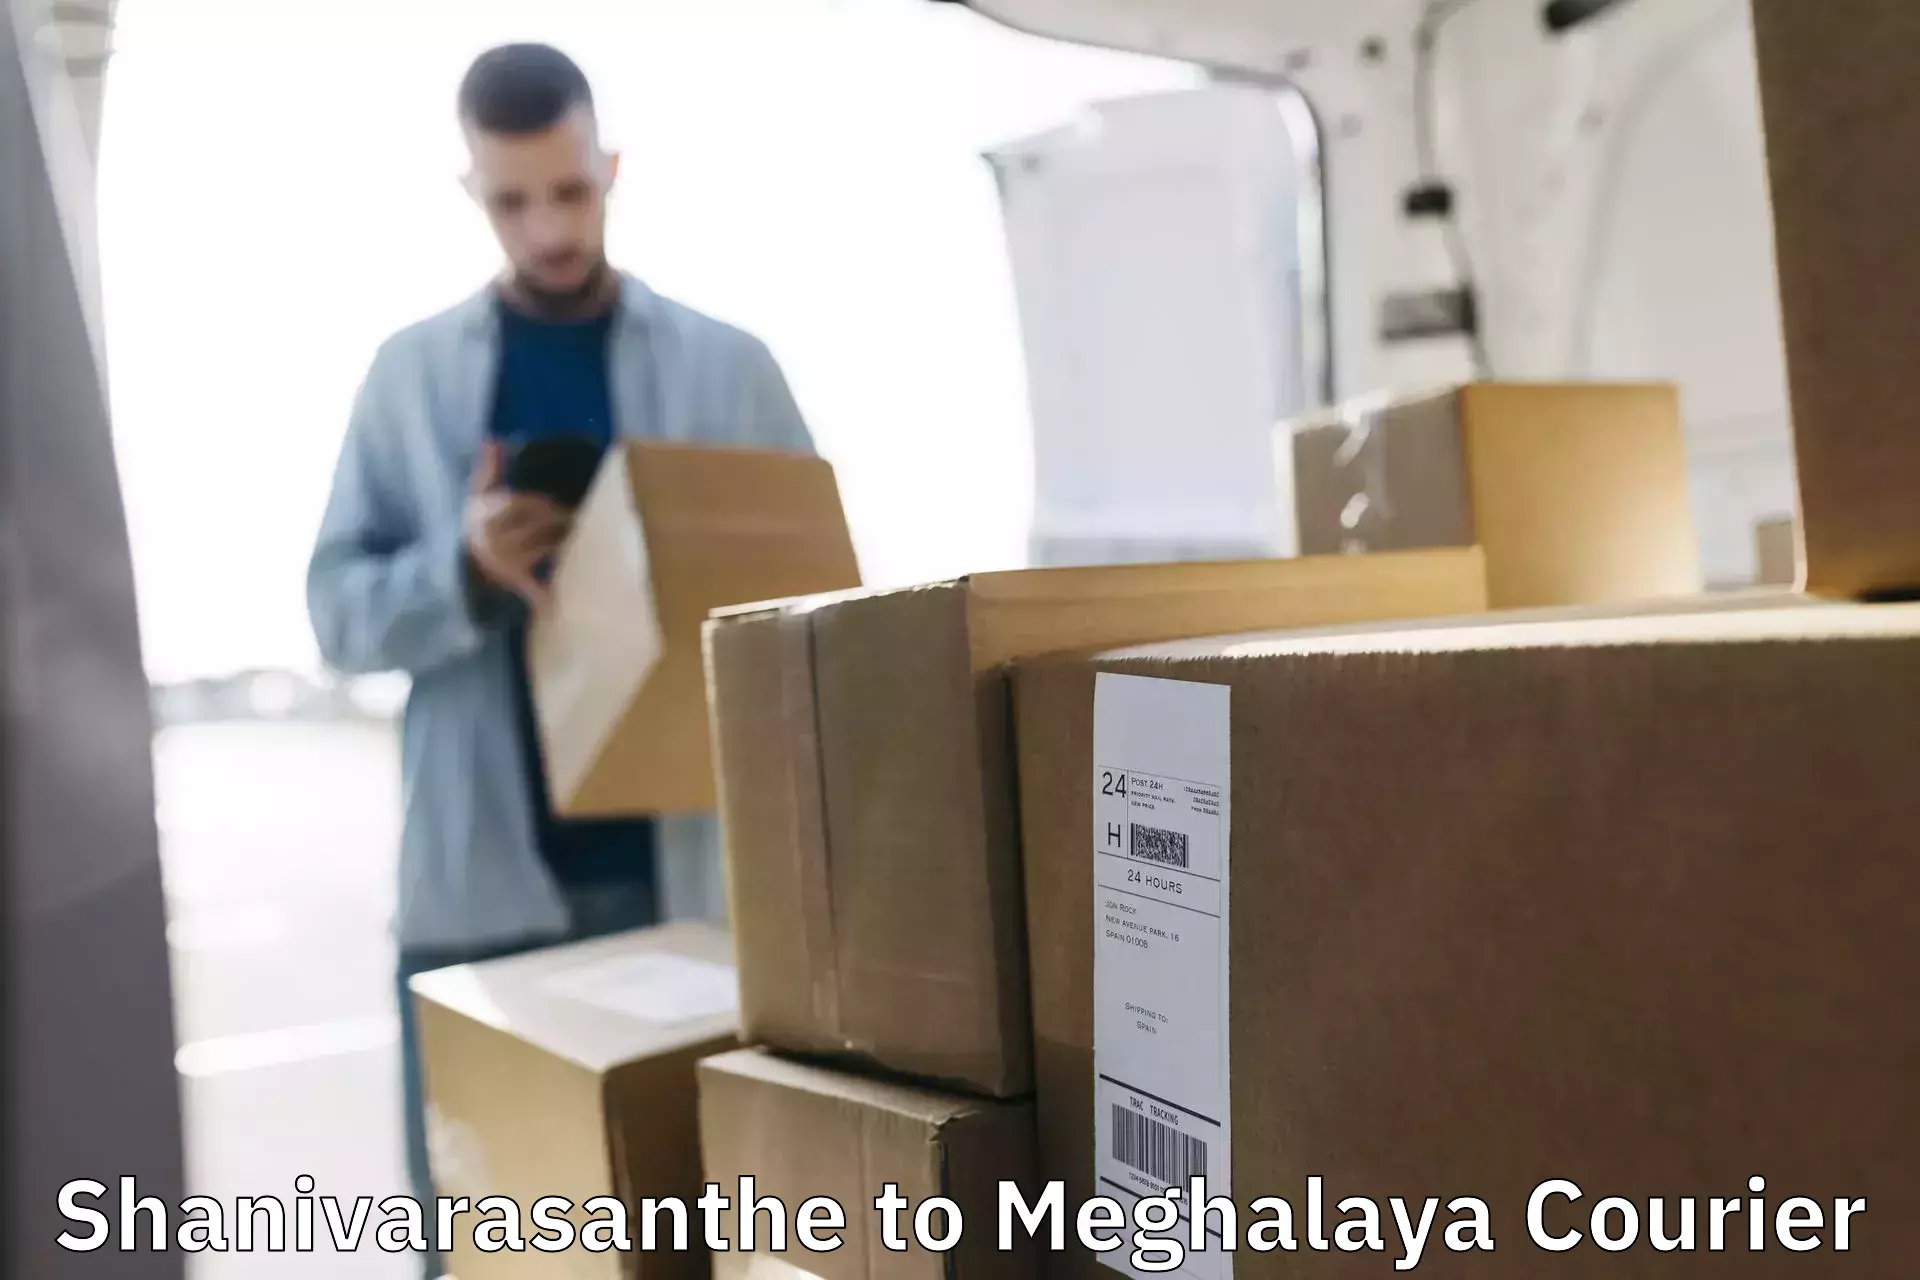 Courier service partnerships Shanivarasanthe to Meghalaya